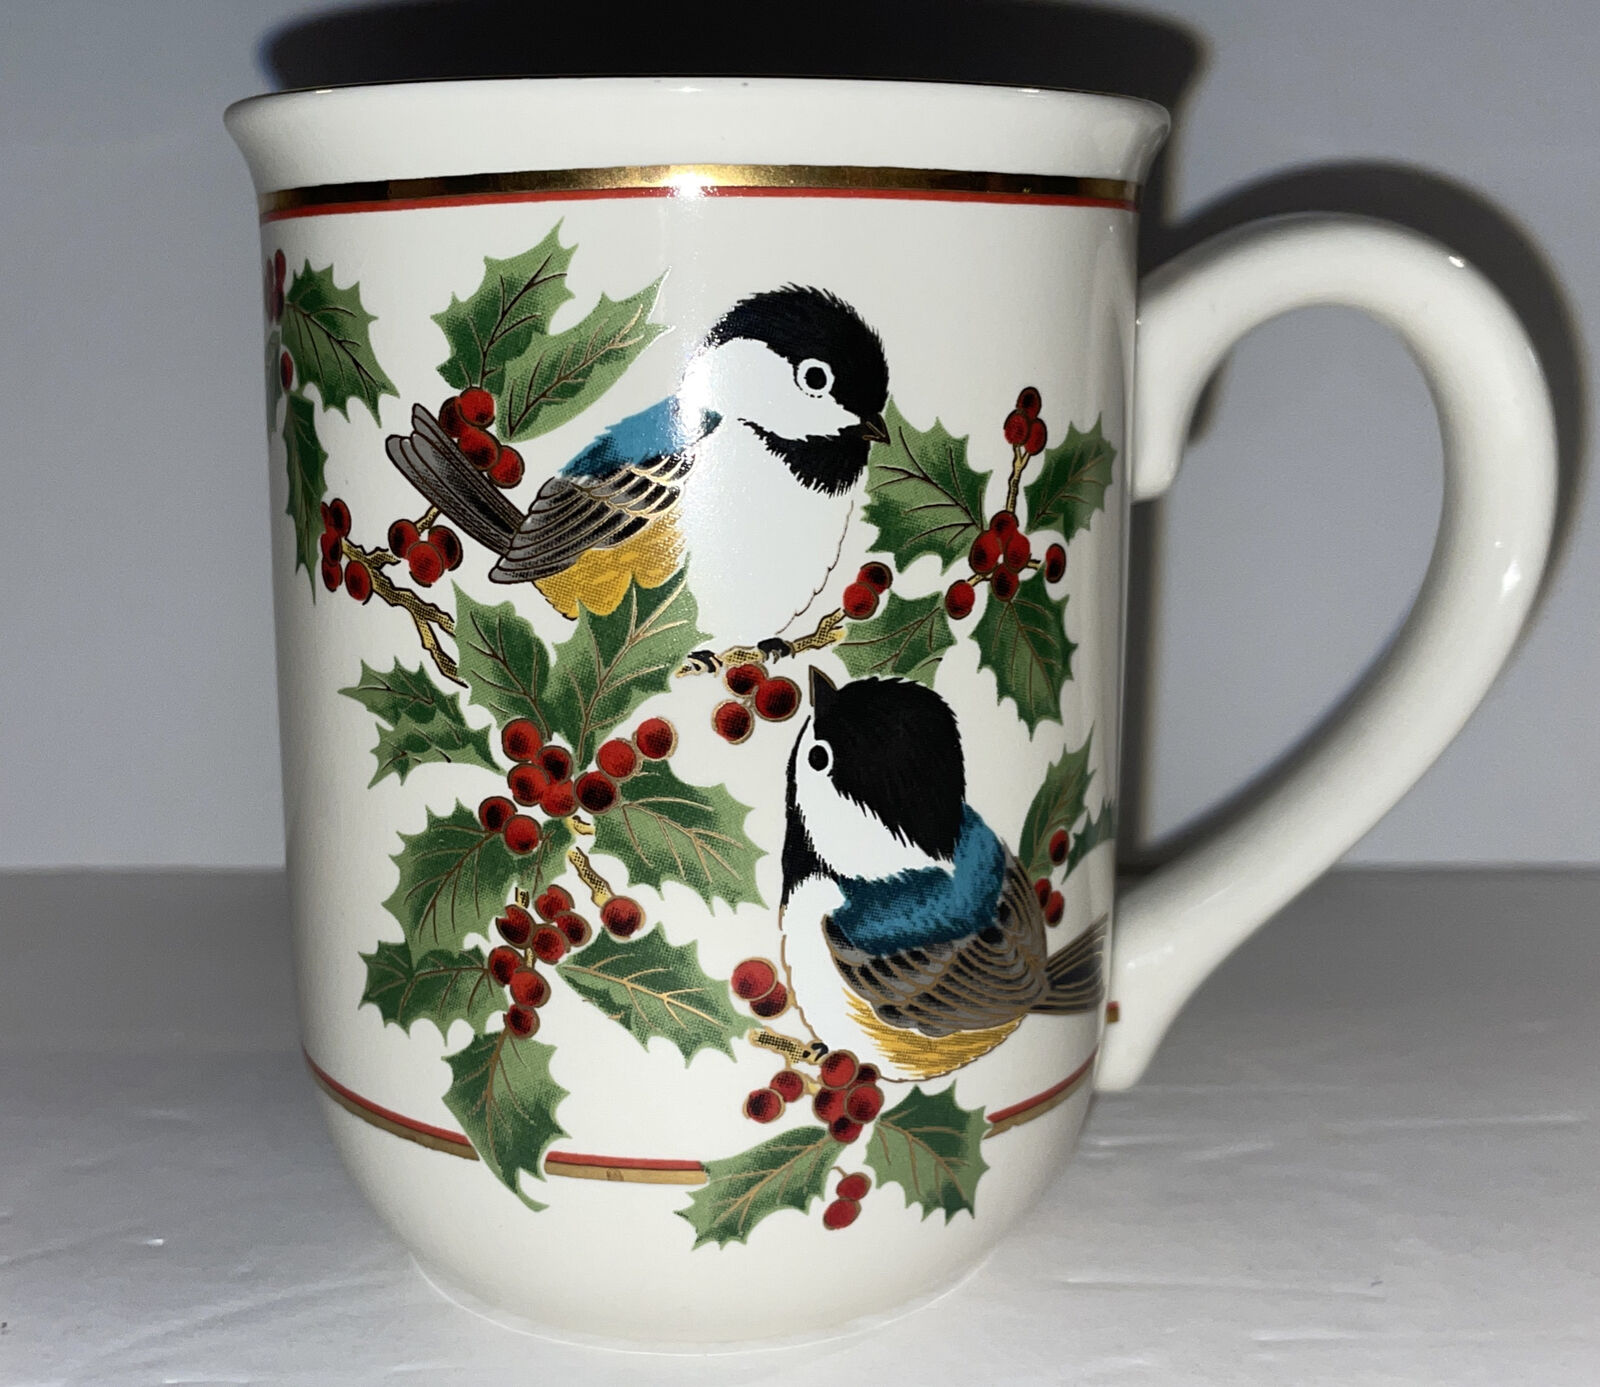 Vintage Otagiri Christmas Mug Gibson Greeting Cards, Birds and Holly, Gold Trim